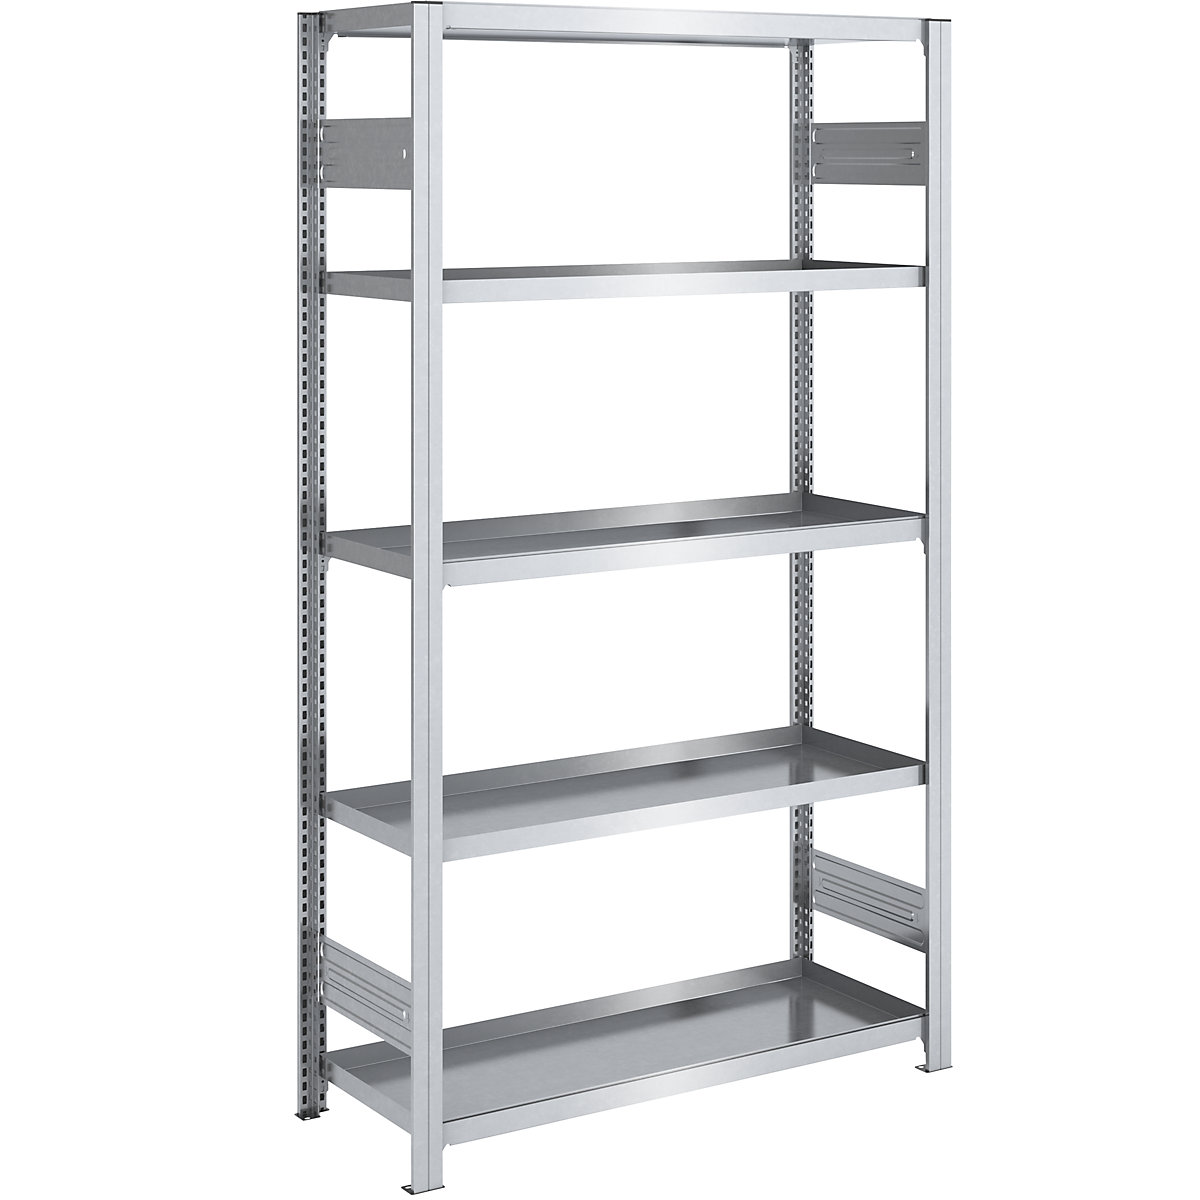 Tray shelf unit – hofe, shelf unit height 2000 mm, tray width 1000 mm, tray depth 500 mm, standard shelf unit